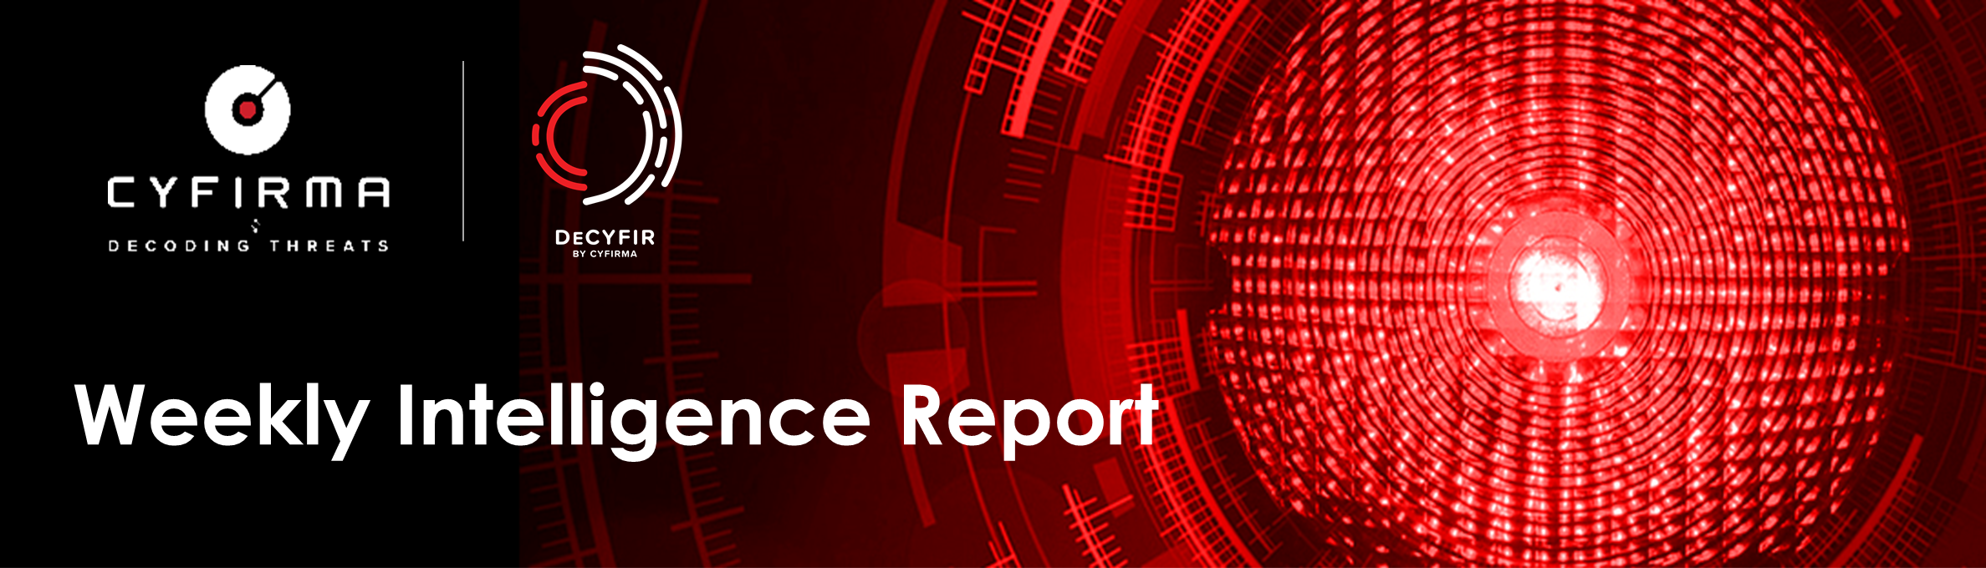 Weekly Cyber-Intelligence Report – 18 Apr 2021